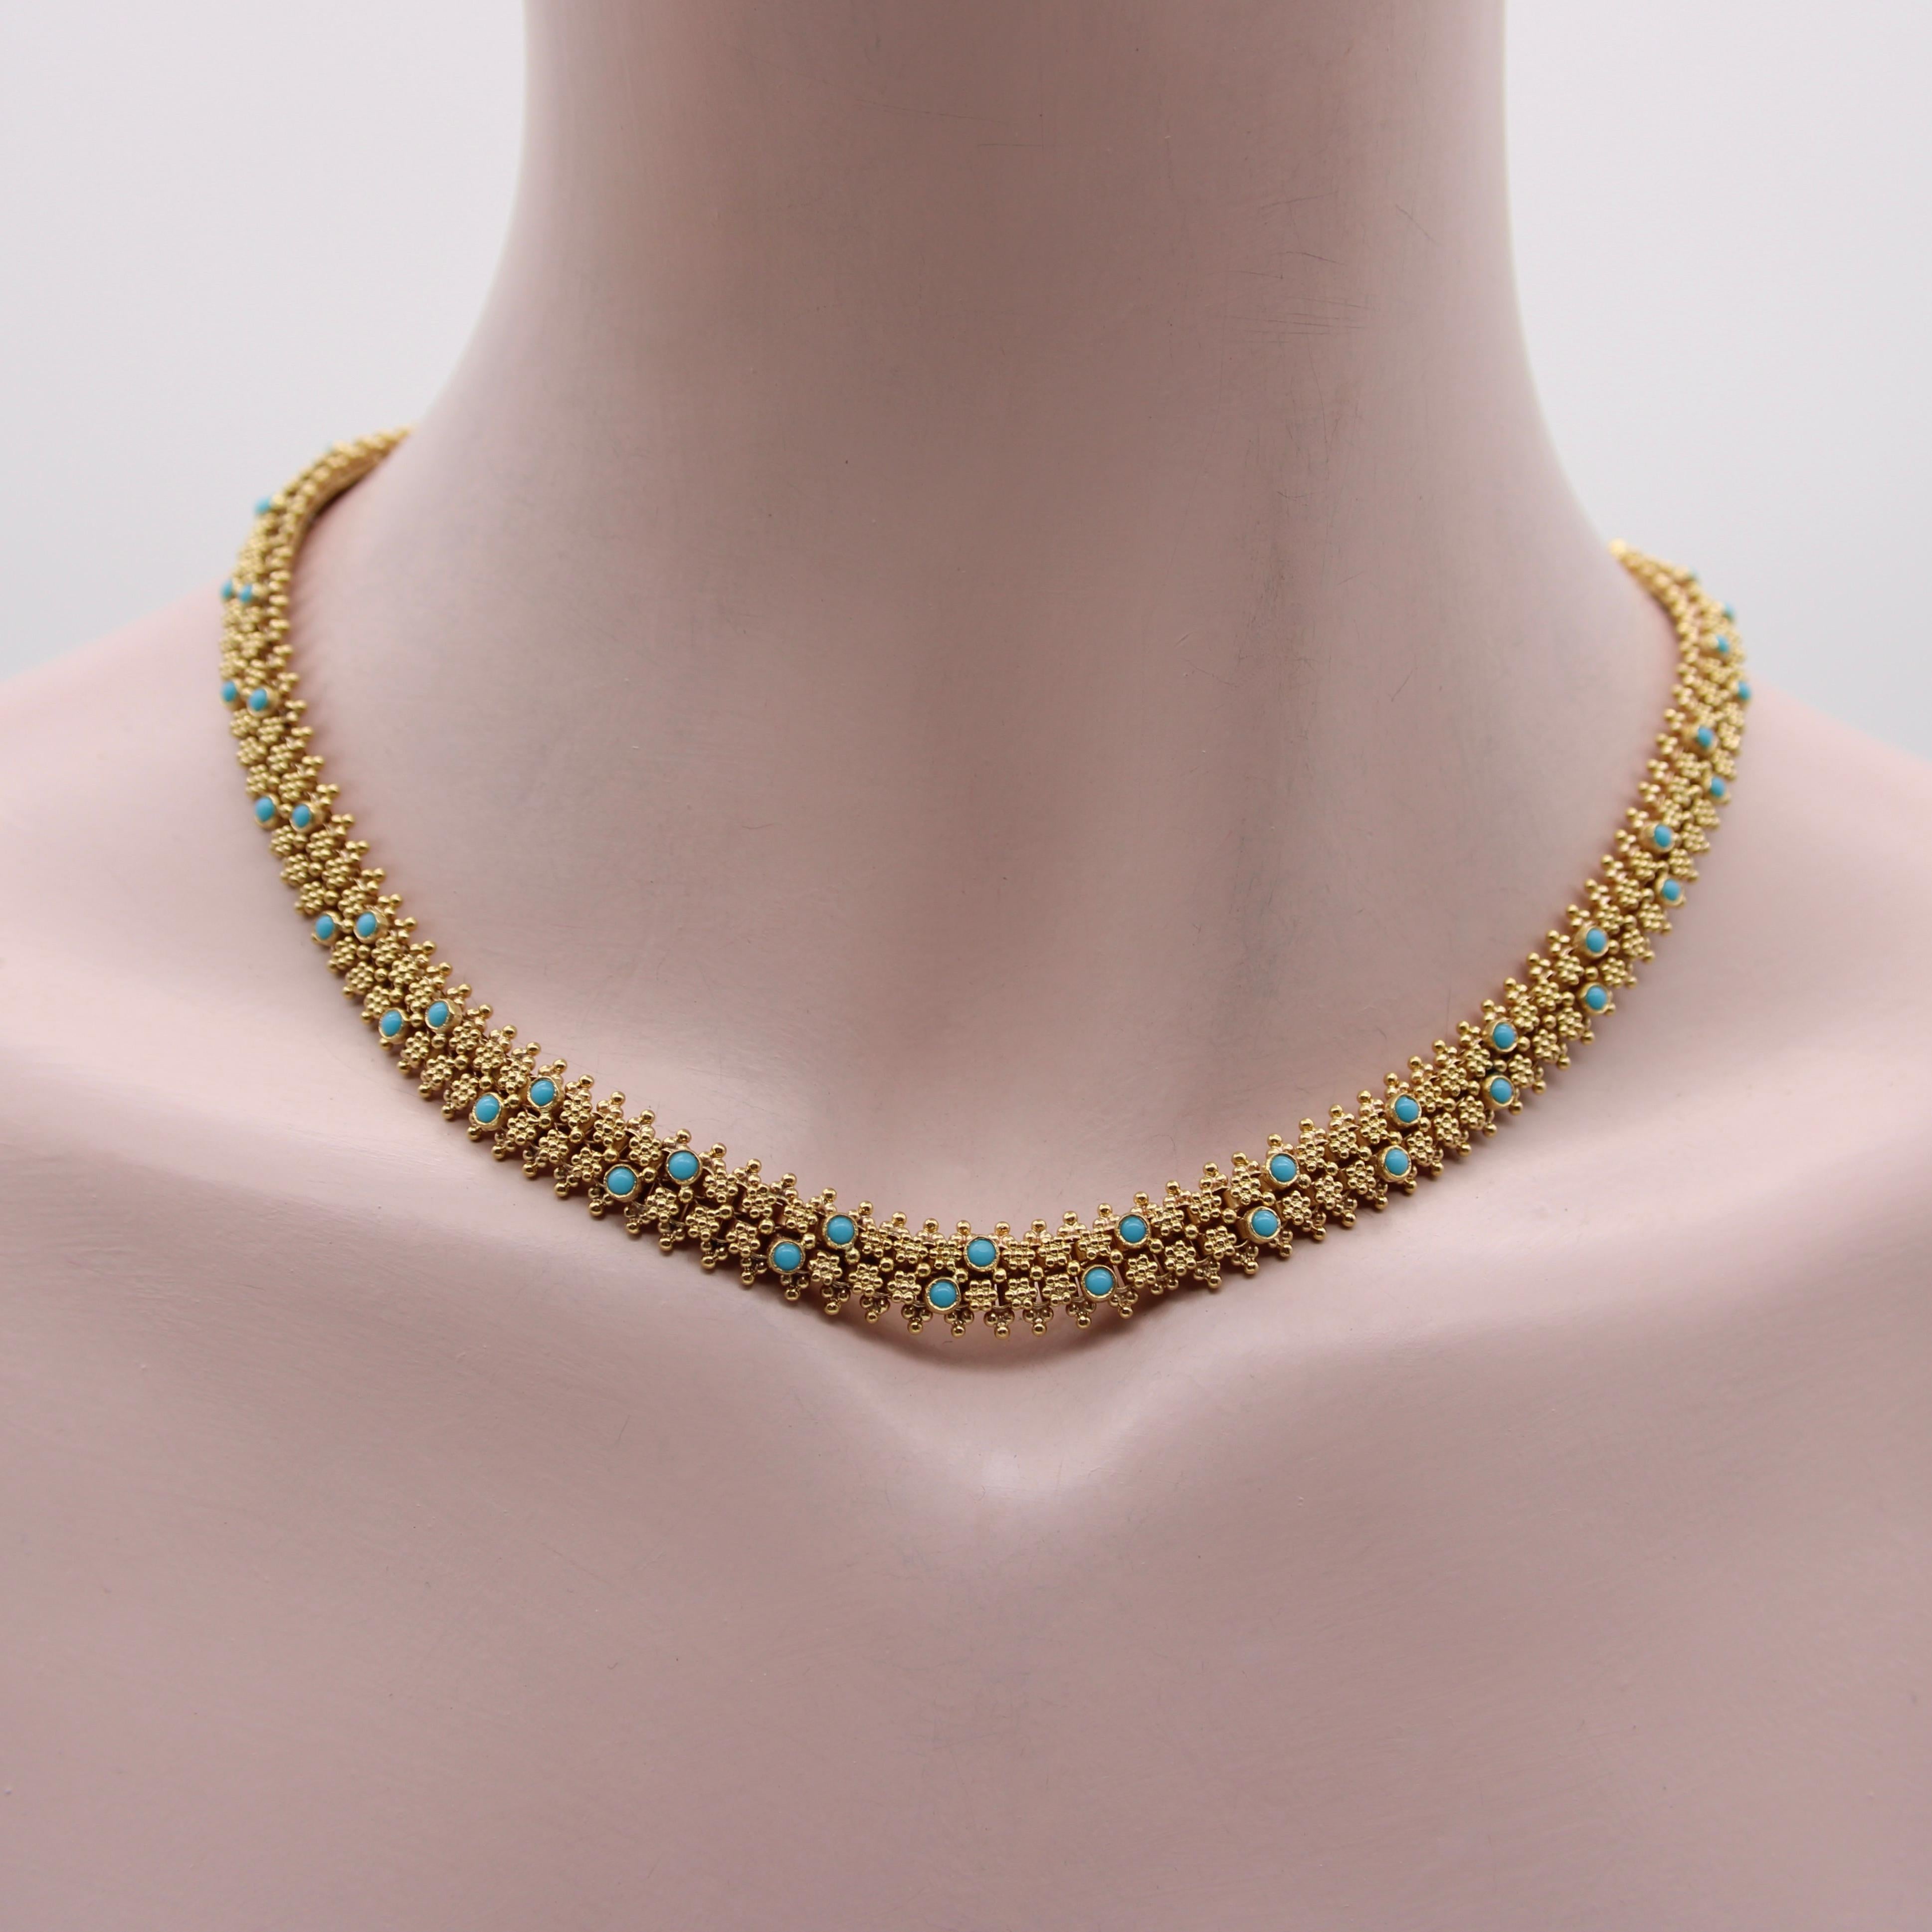 Cabochon Etruscan Revival Portuguese Cannetille 19.2K Gold & Turquoise Necklace For Sale